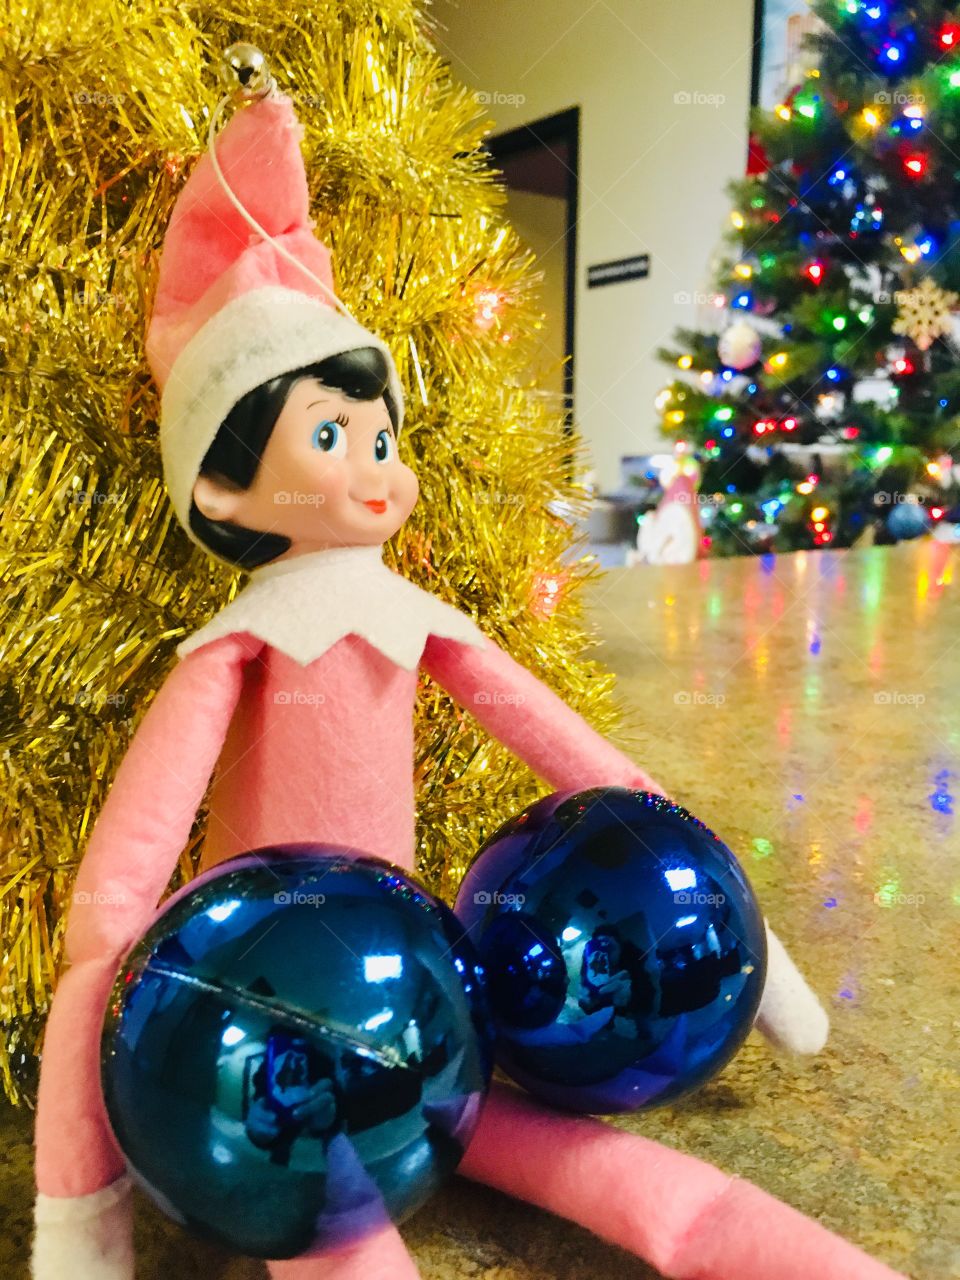 Naughty elf has blue balls 😂